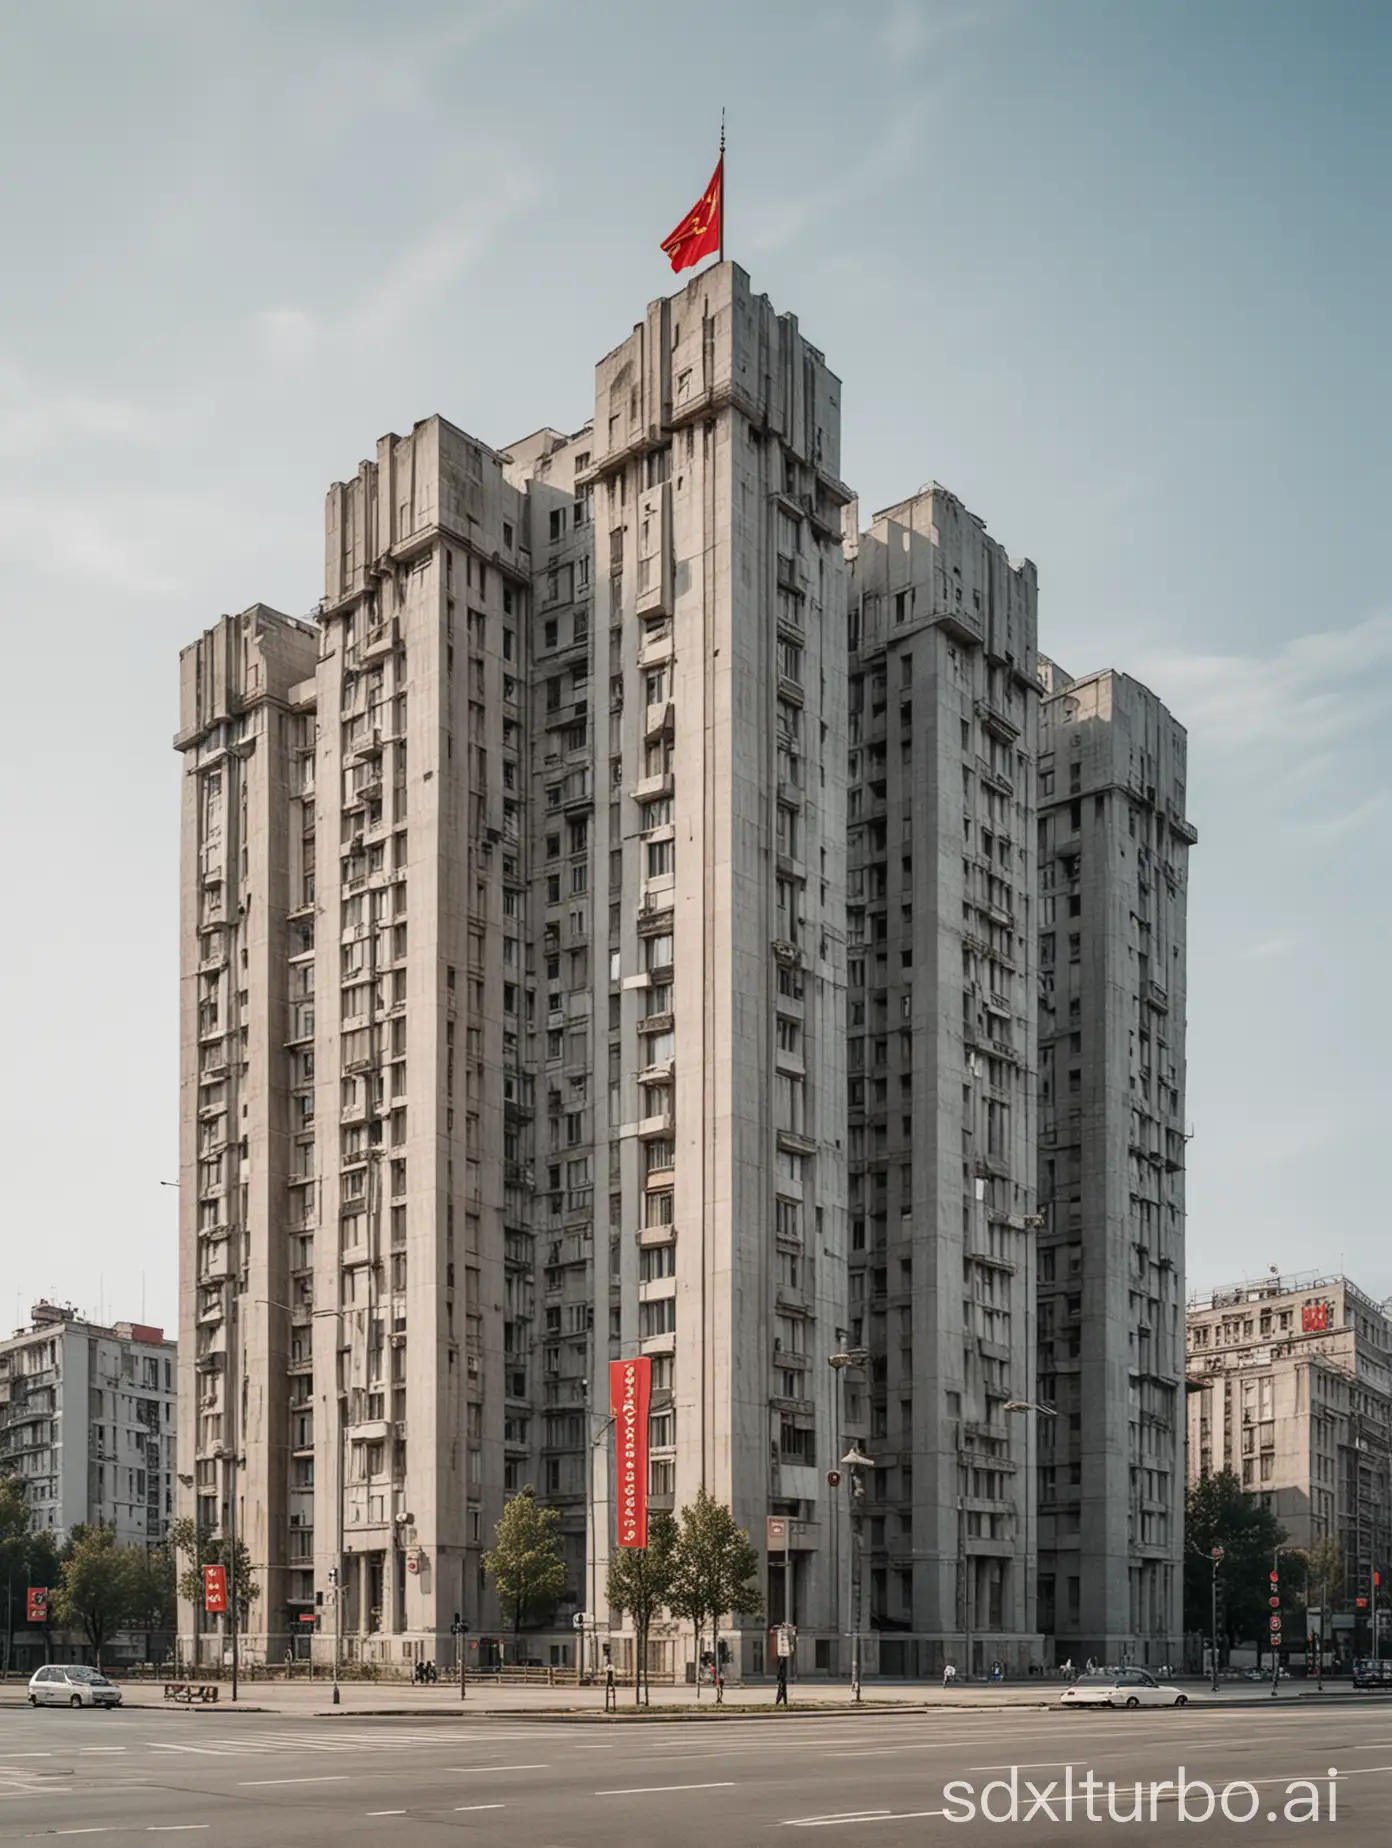 CommunistStyle-Architecture-Symmetrical-Urban-Landscapes-and-Socialist-Realism